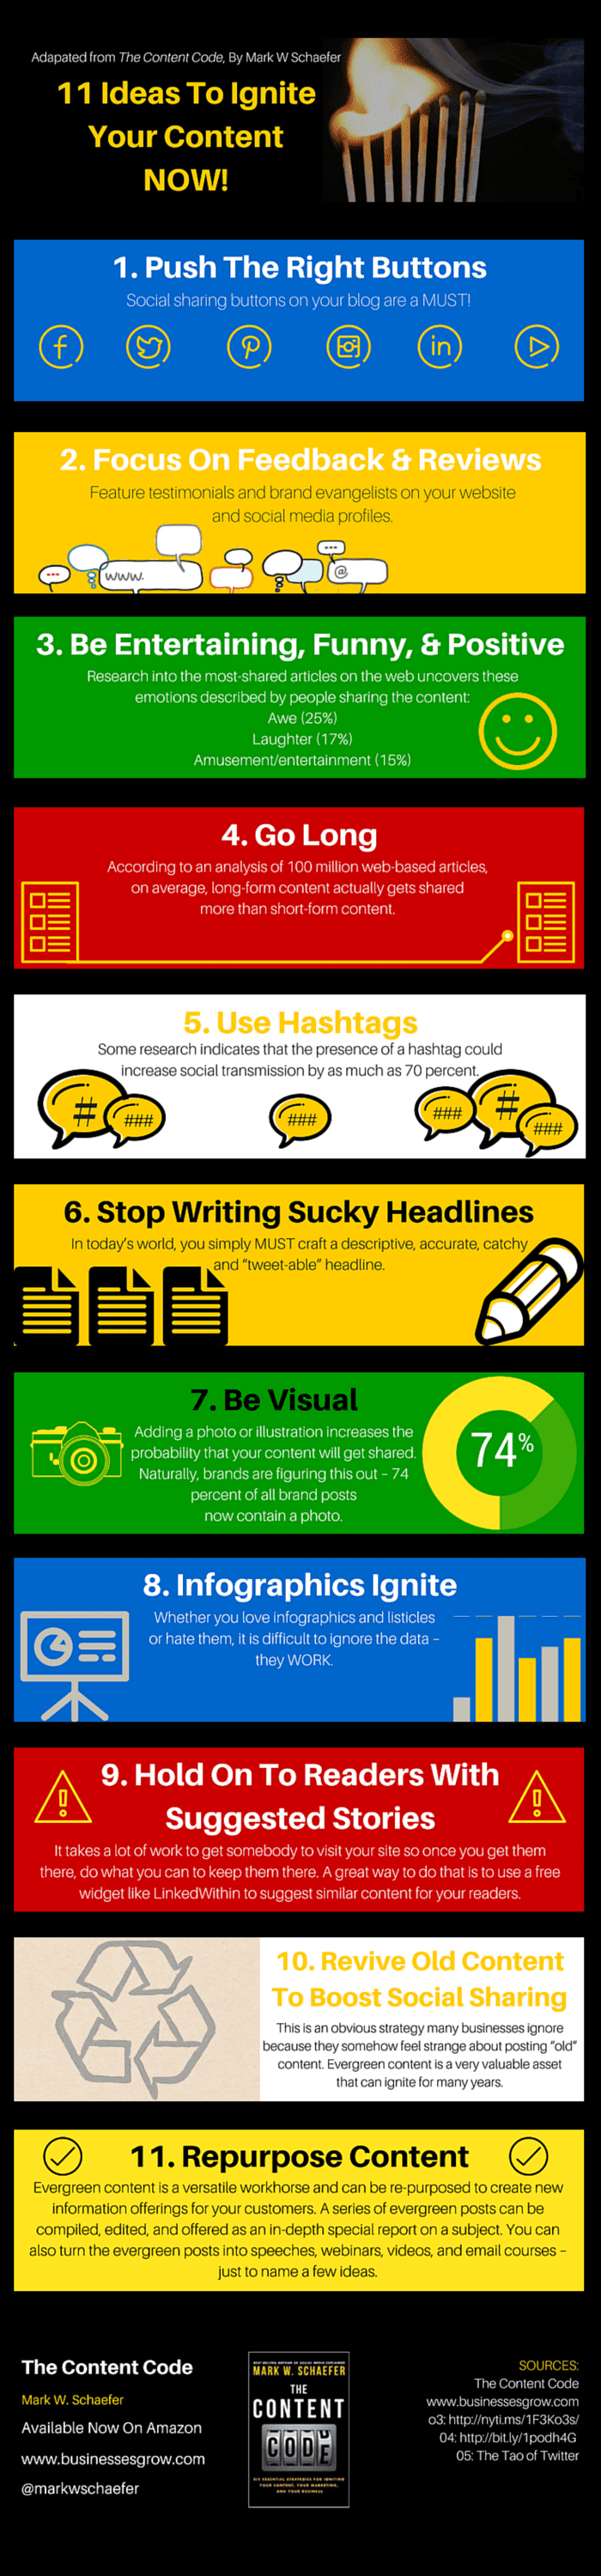 11 Ways To Ignite Content - #infographic